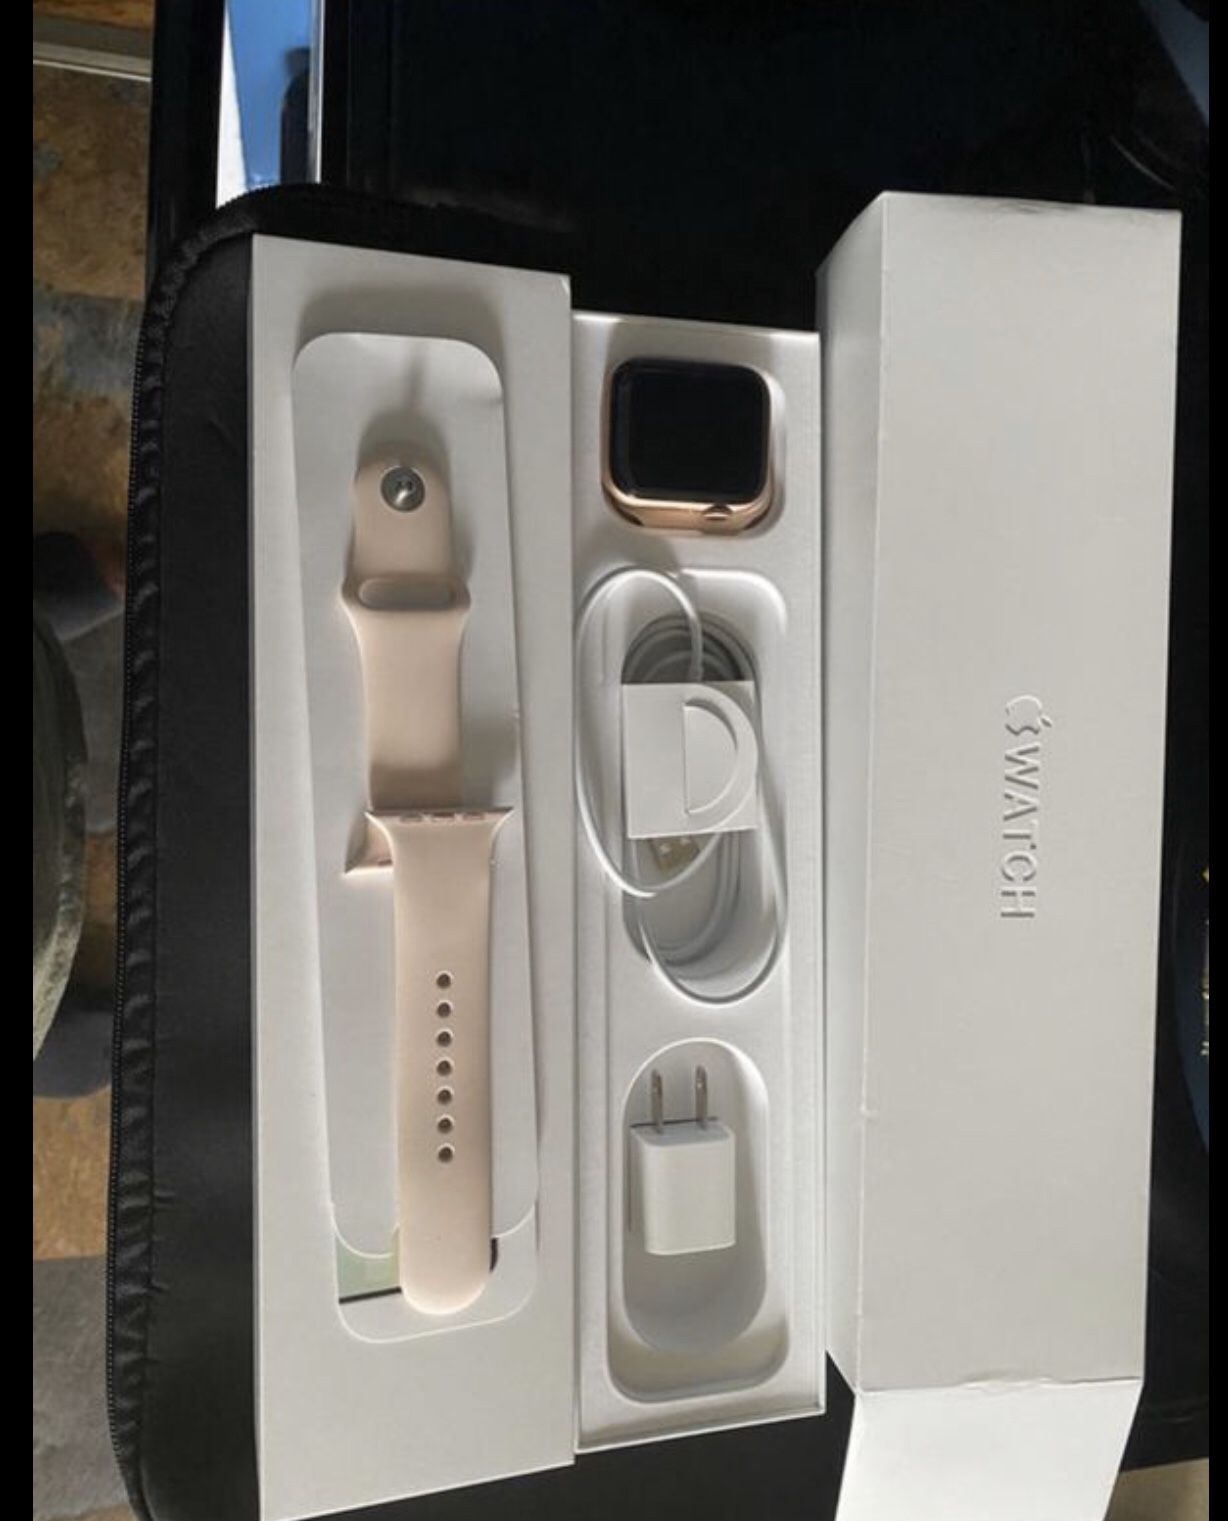 Apple Watch series 4 unlocked